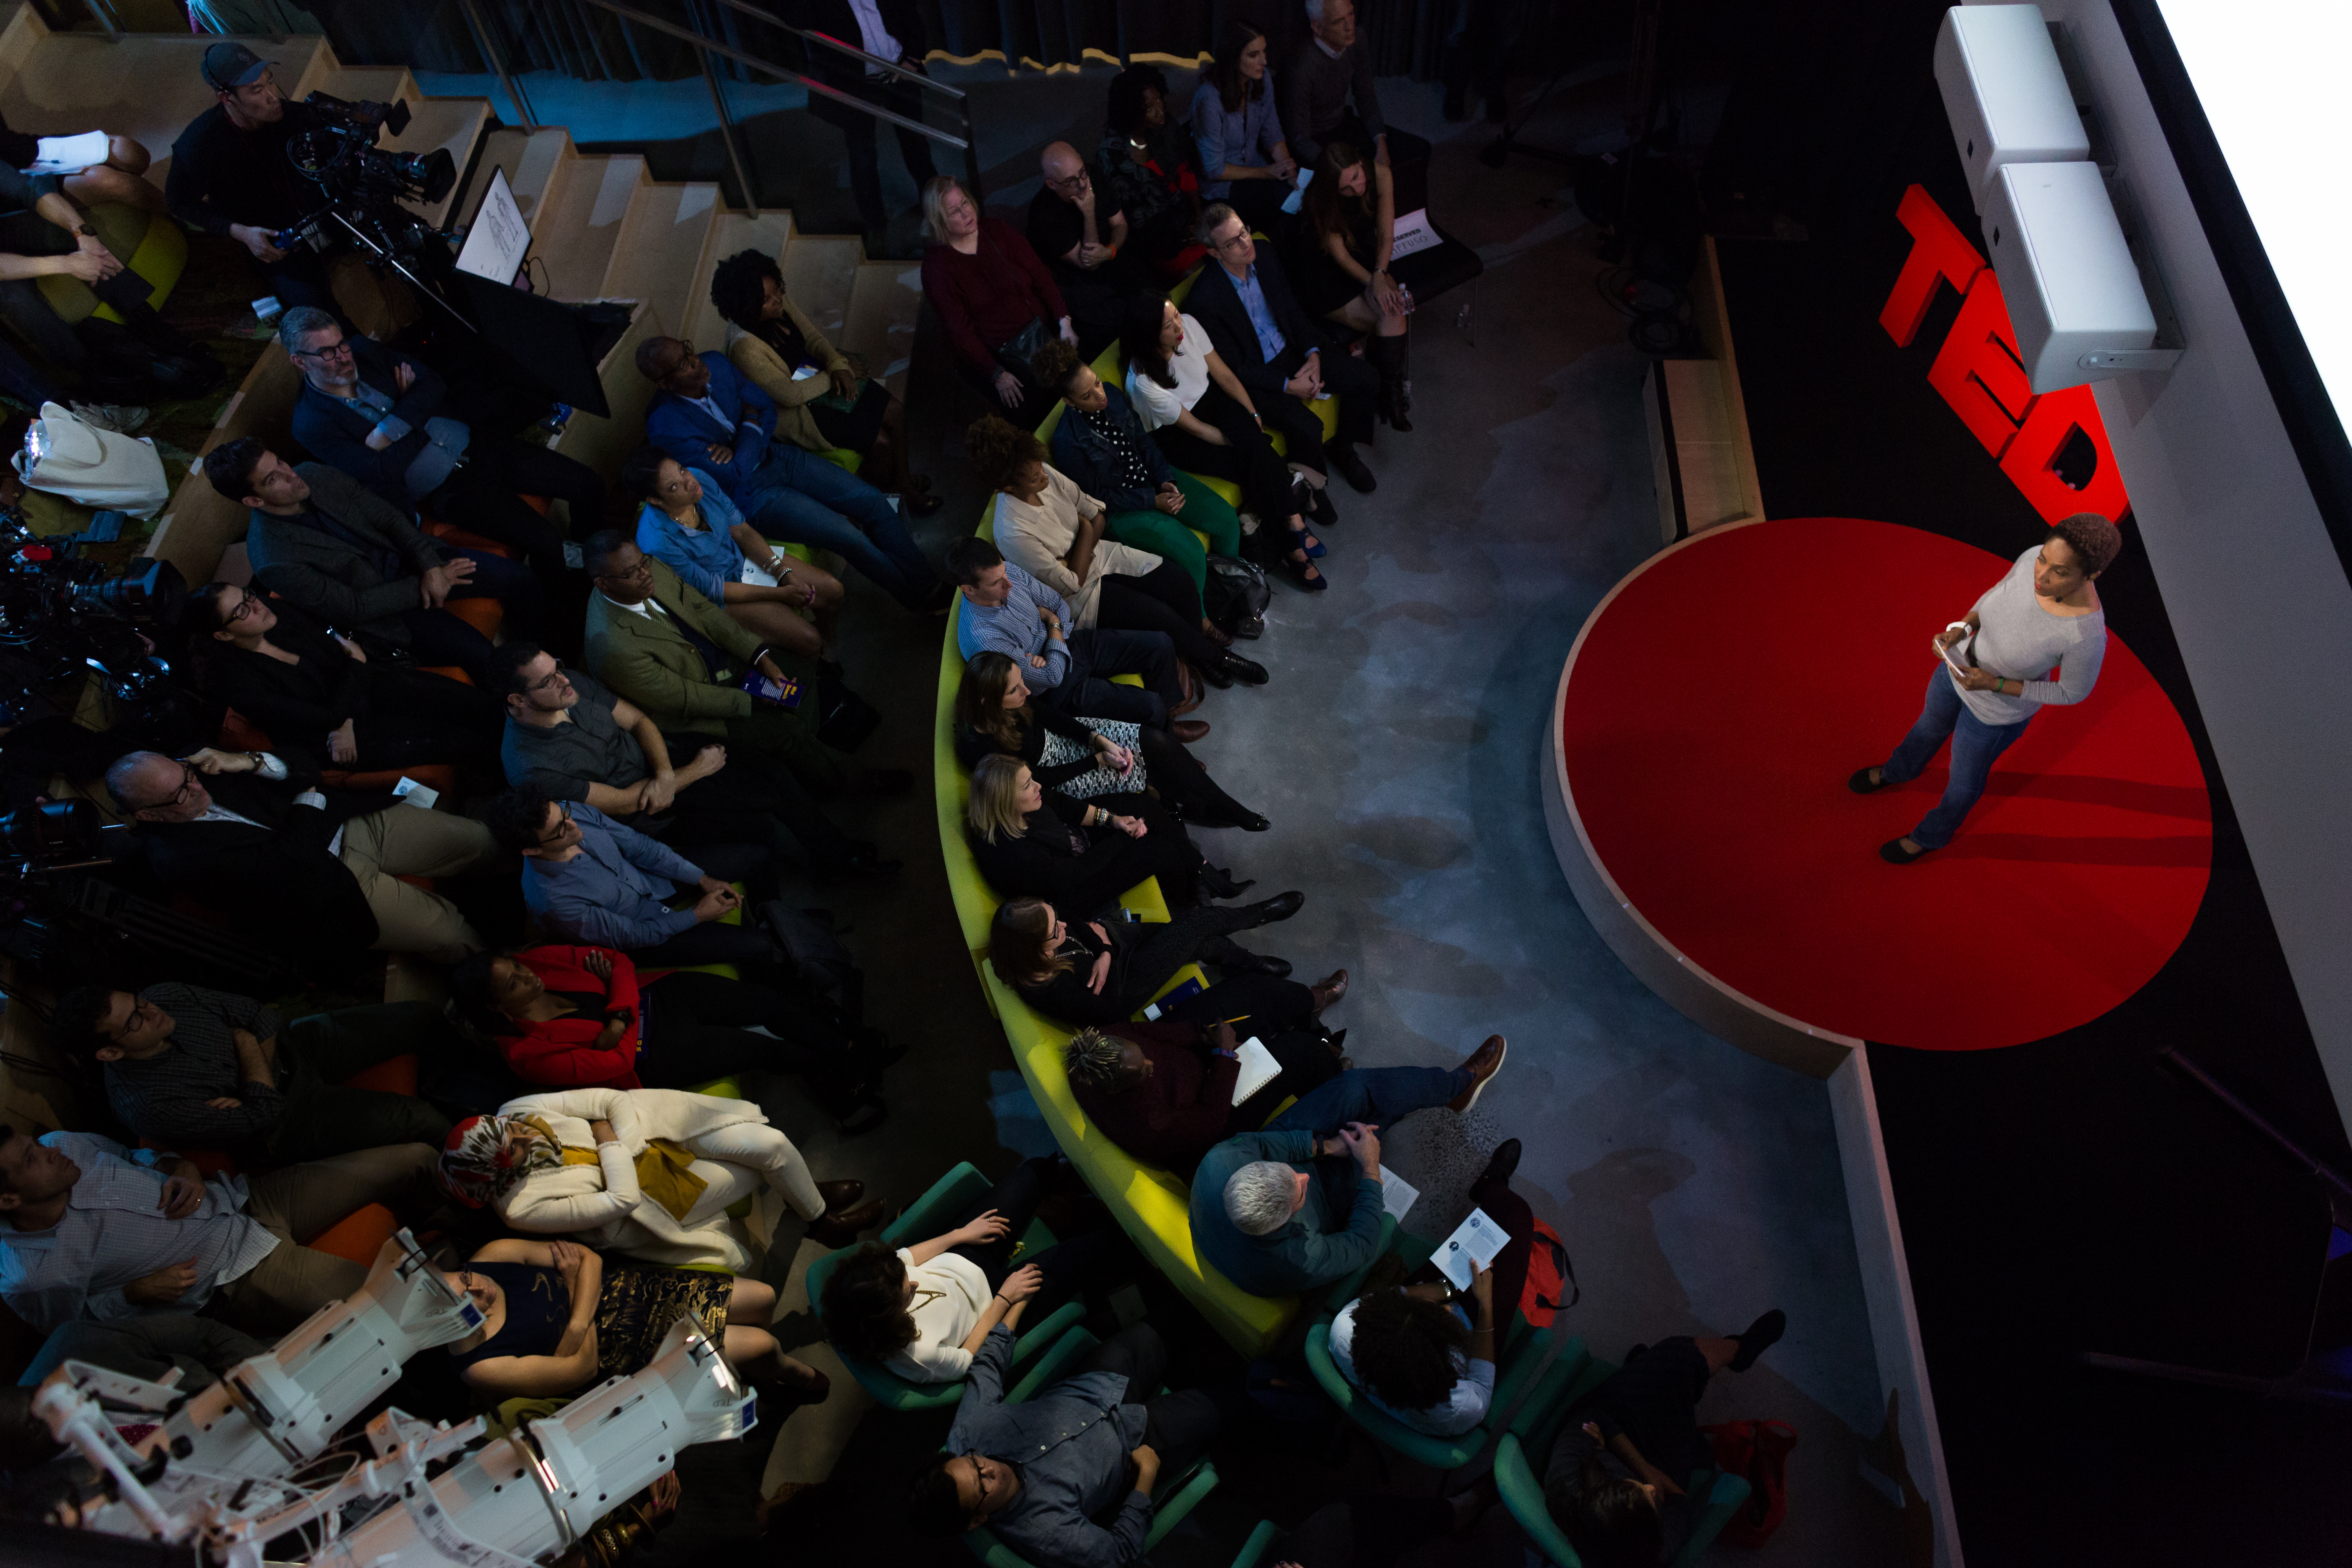 Olivia Affuso speaks at TEDNYC -What Drives Us, October 5, 2016, New York, NY. Photo: Ryan Lash / TED